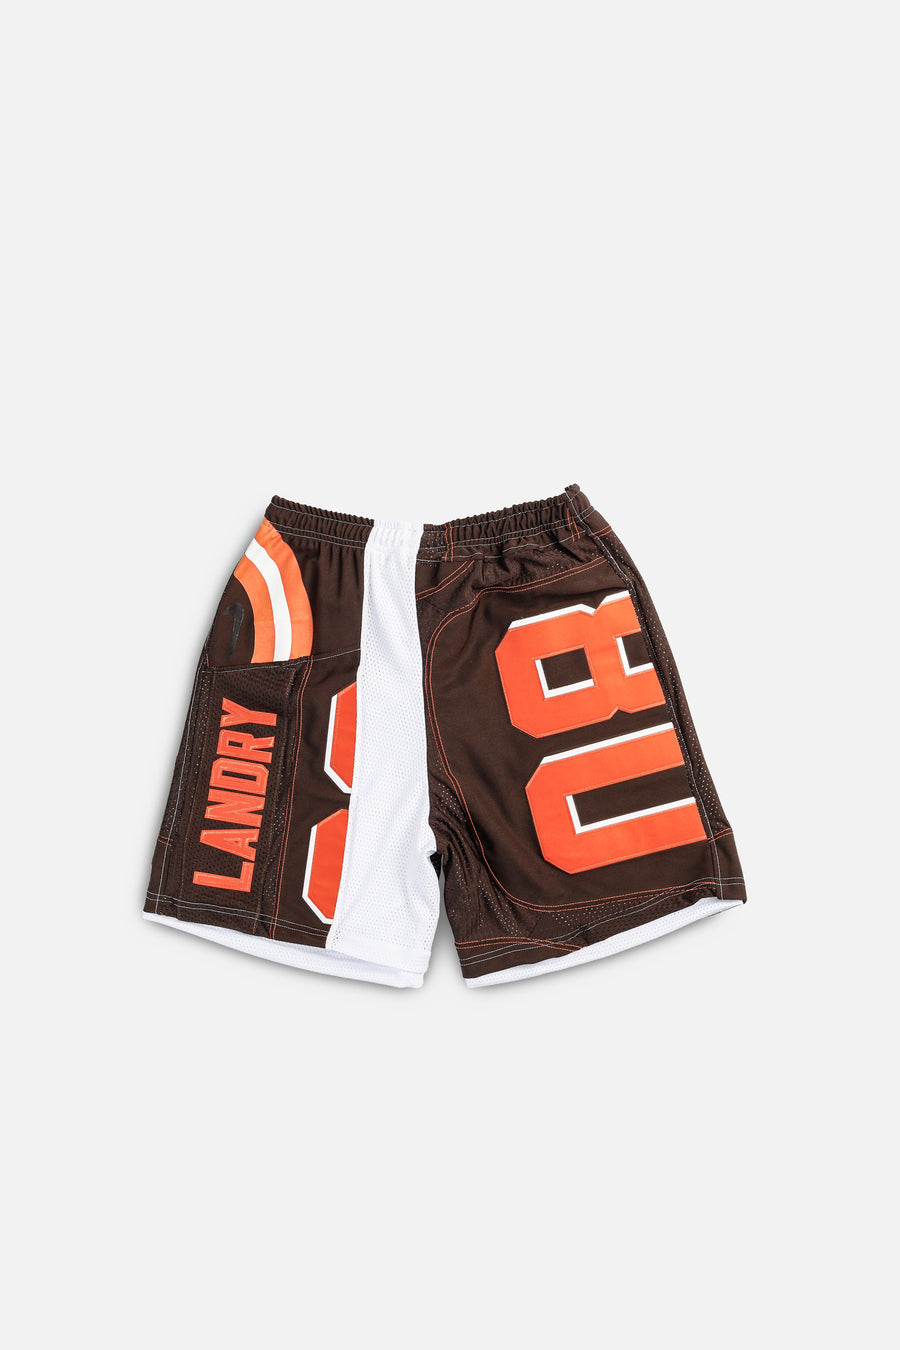 Unisex Rework Cleveland Browns NFL Jersey Shorts - M